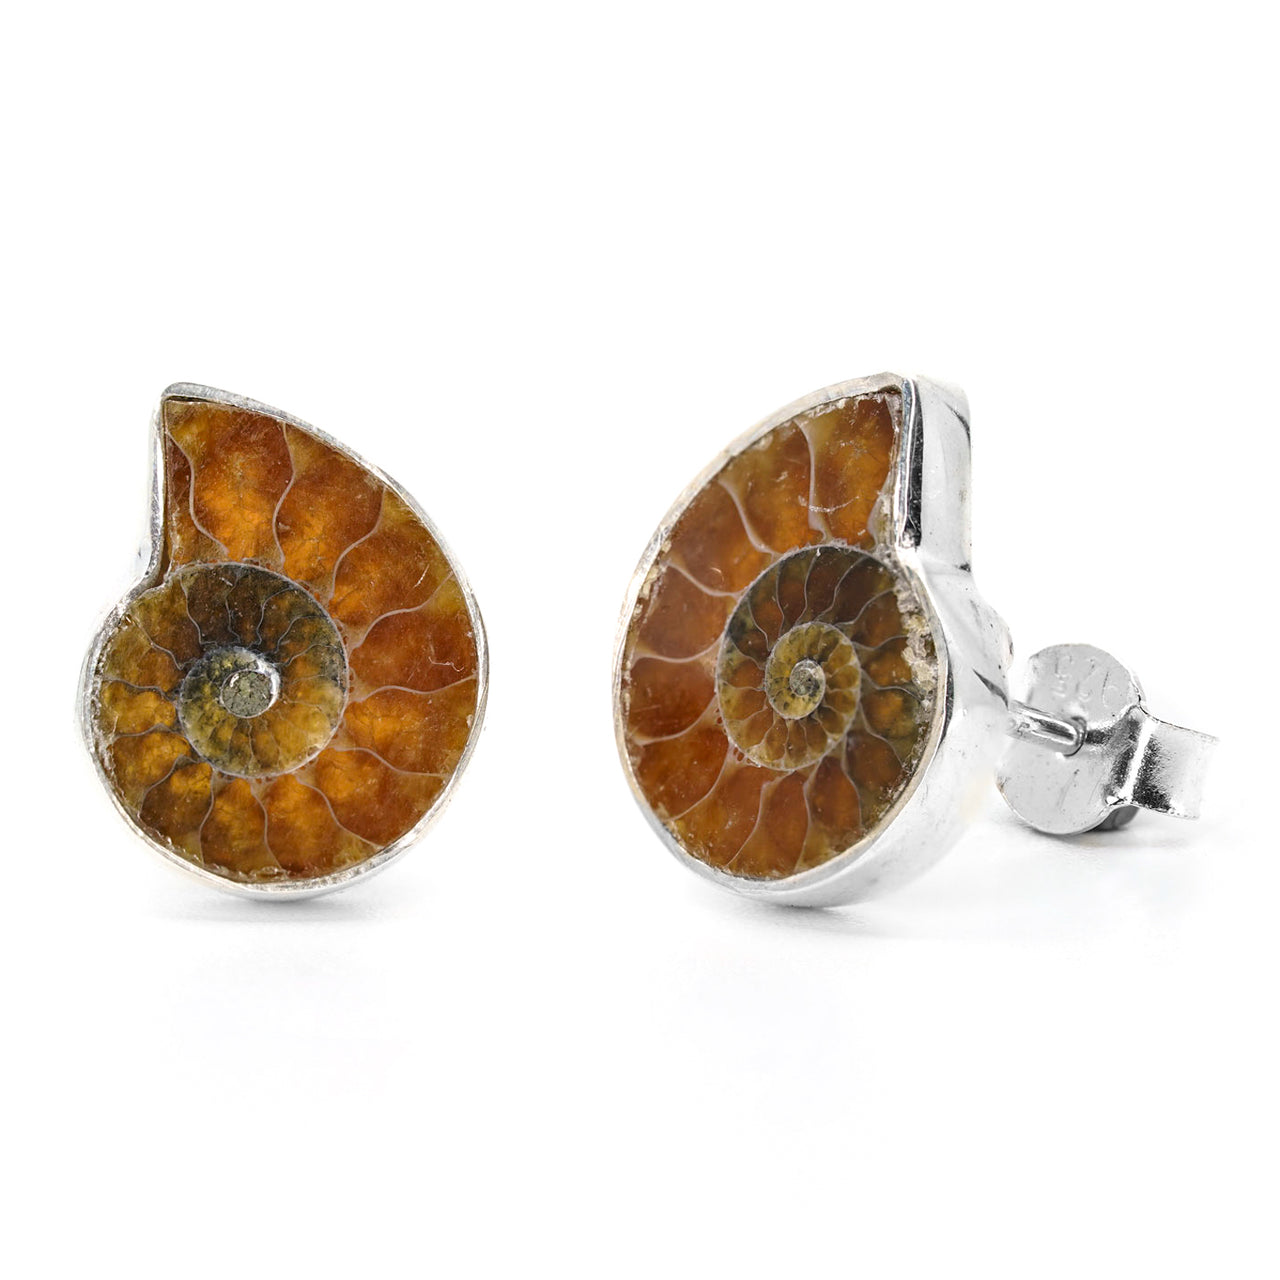 Ammonite Fossil Earring - Fossil Jewellery